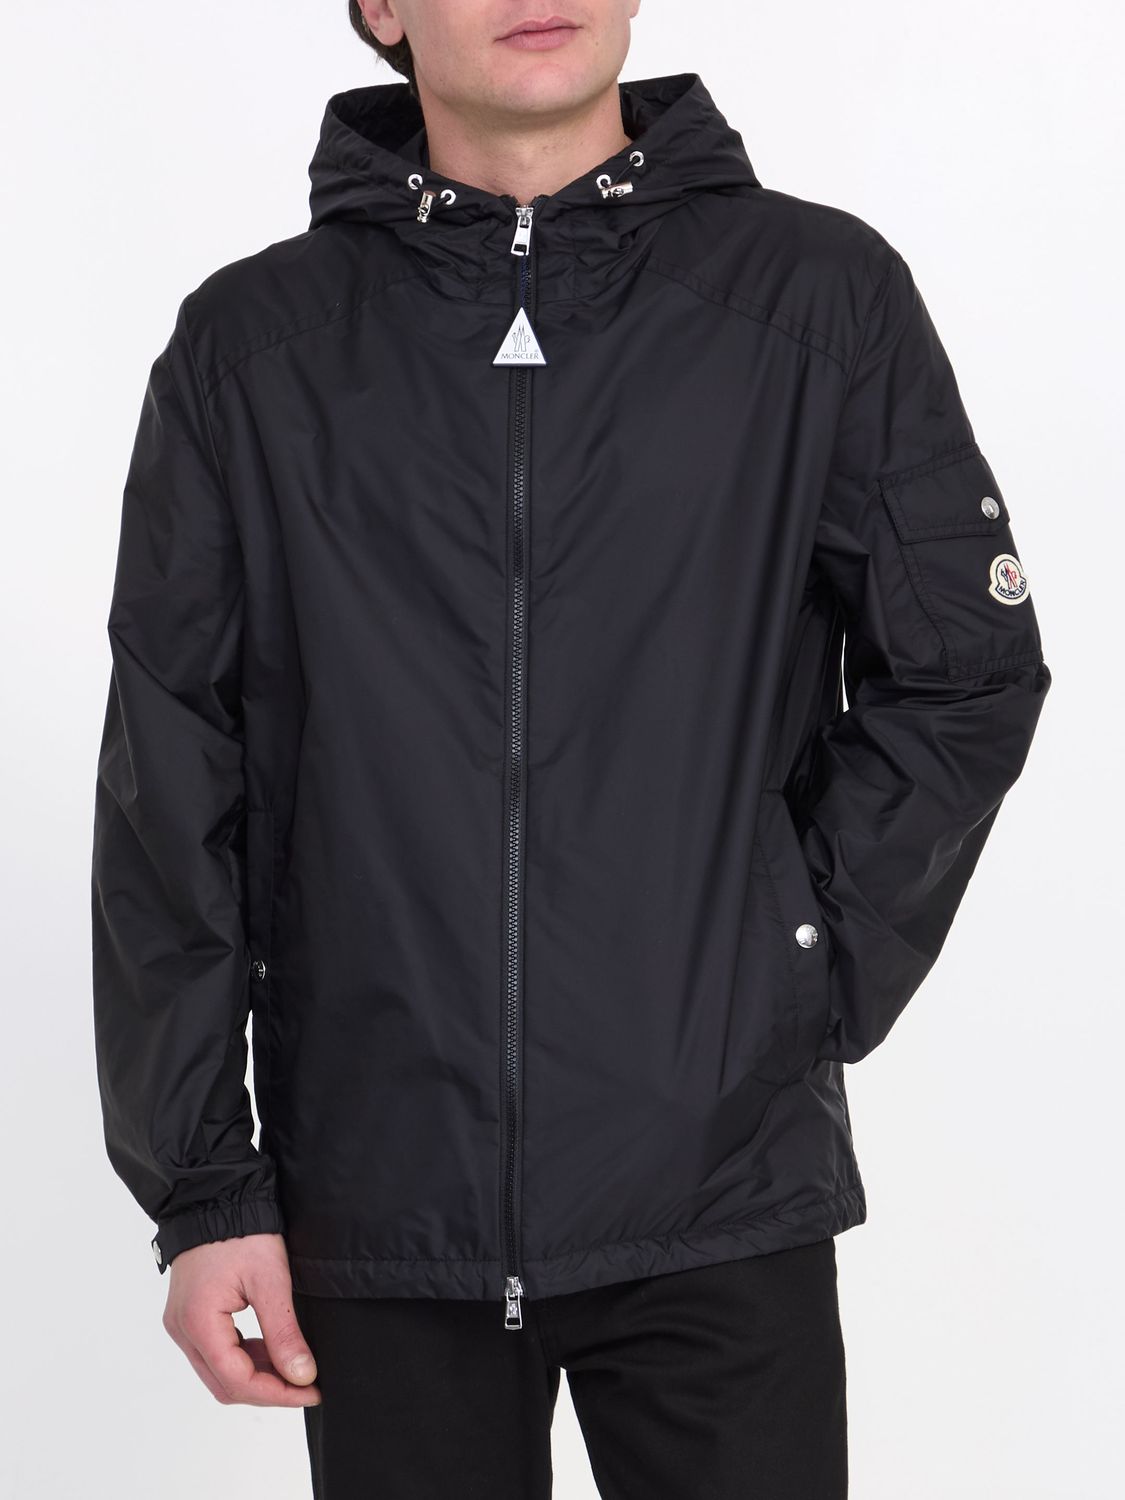 MONCLER Black Mid-Length Parka Jacket for Women with Mesh Details